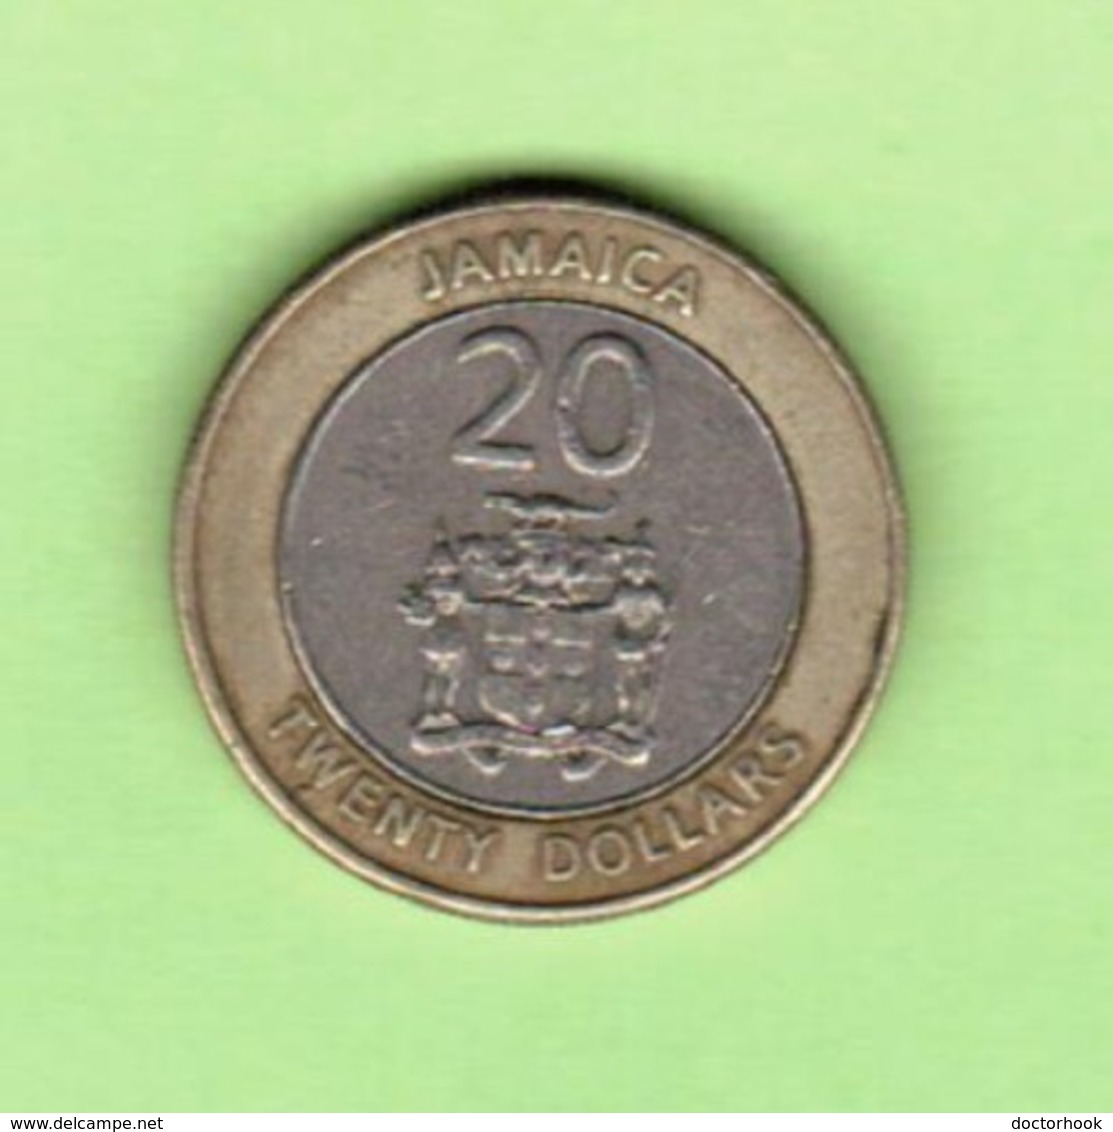 JAMAICA   $20.00 DOLLARS 2000  (KM # 182) #5204 - Jamaica